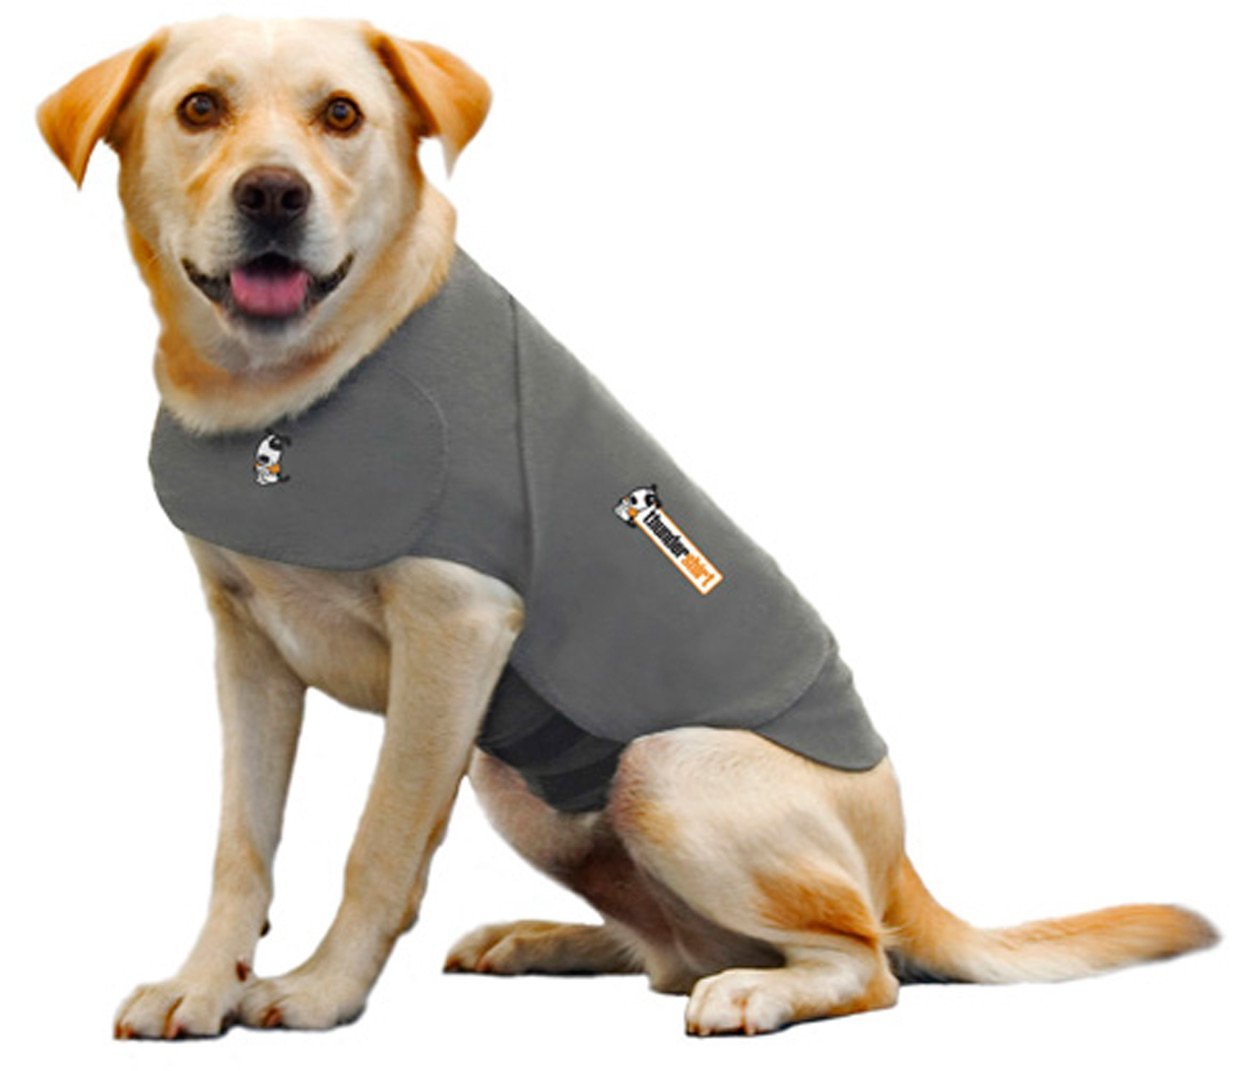 thunder buddy shirt for dogs